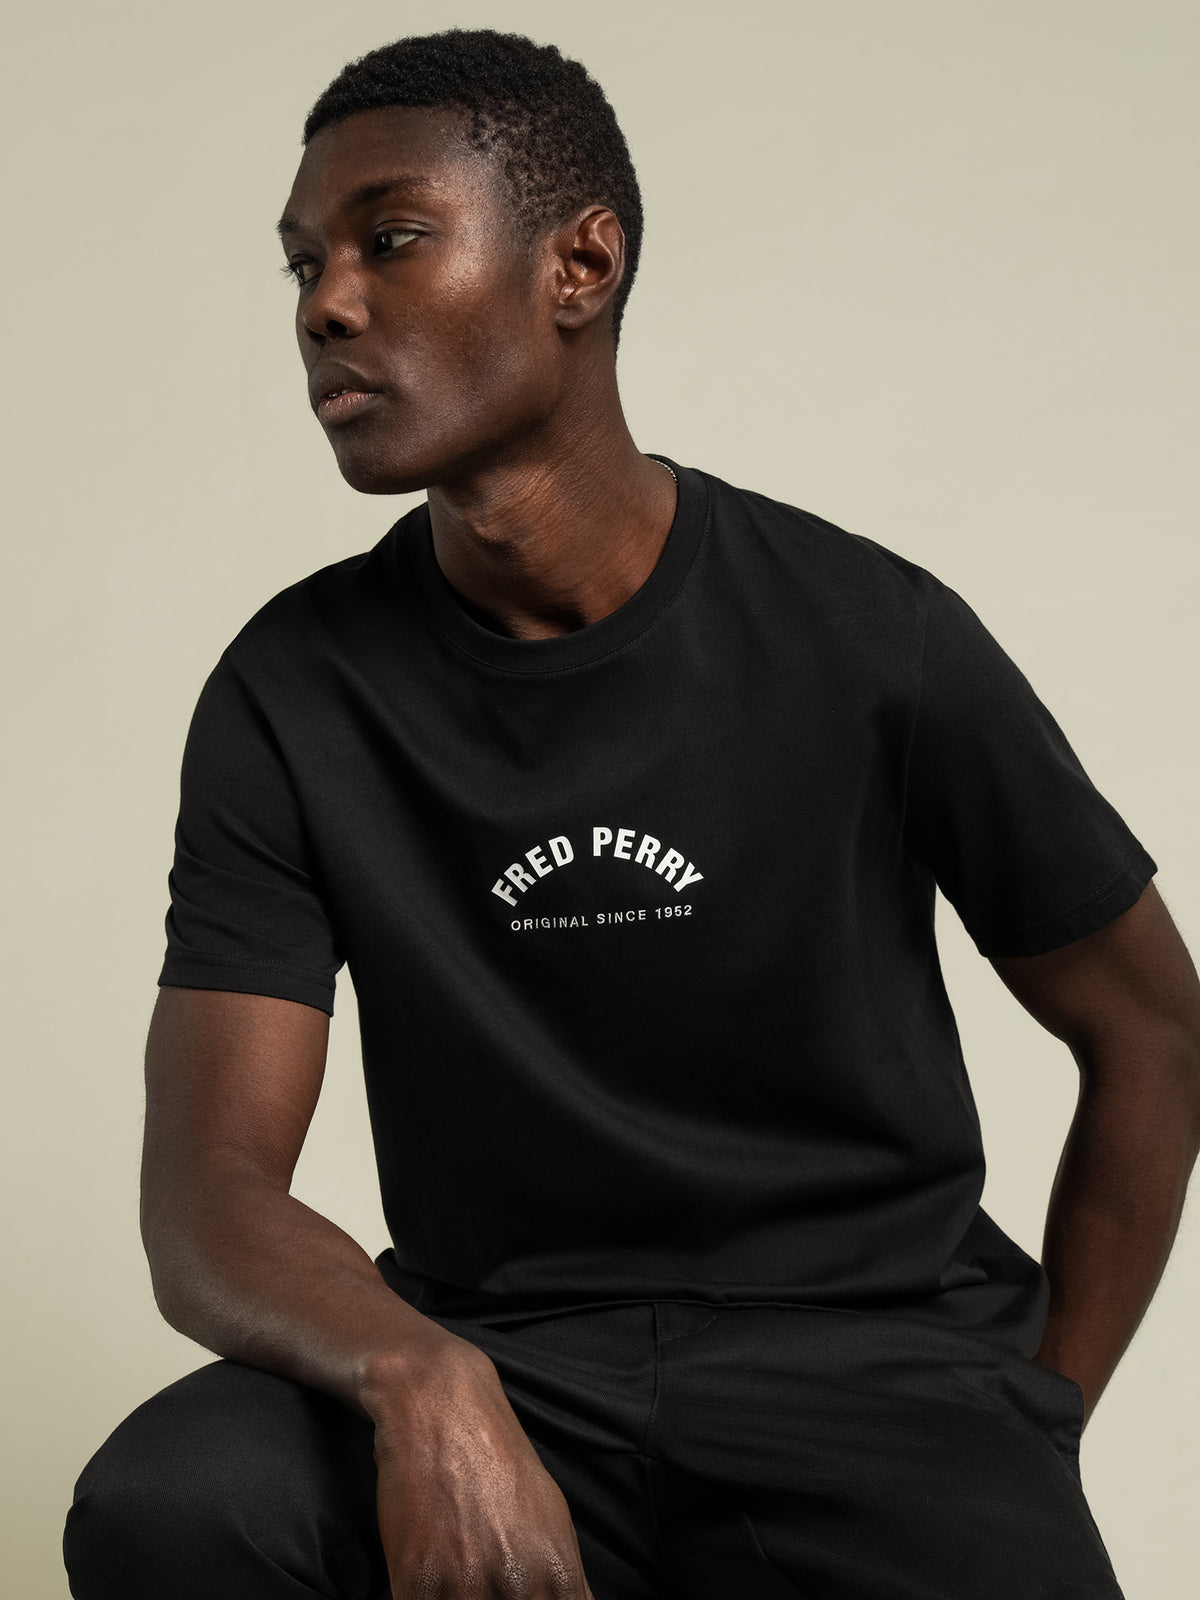 Arch Branding T-Shirt in Black &amp; White